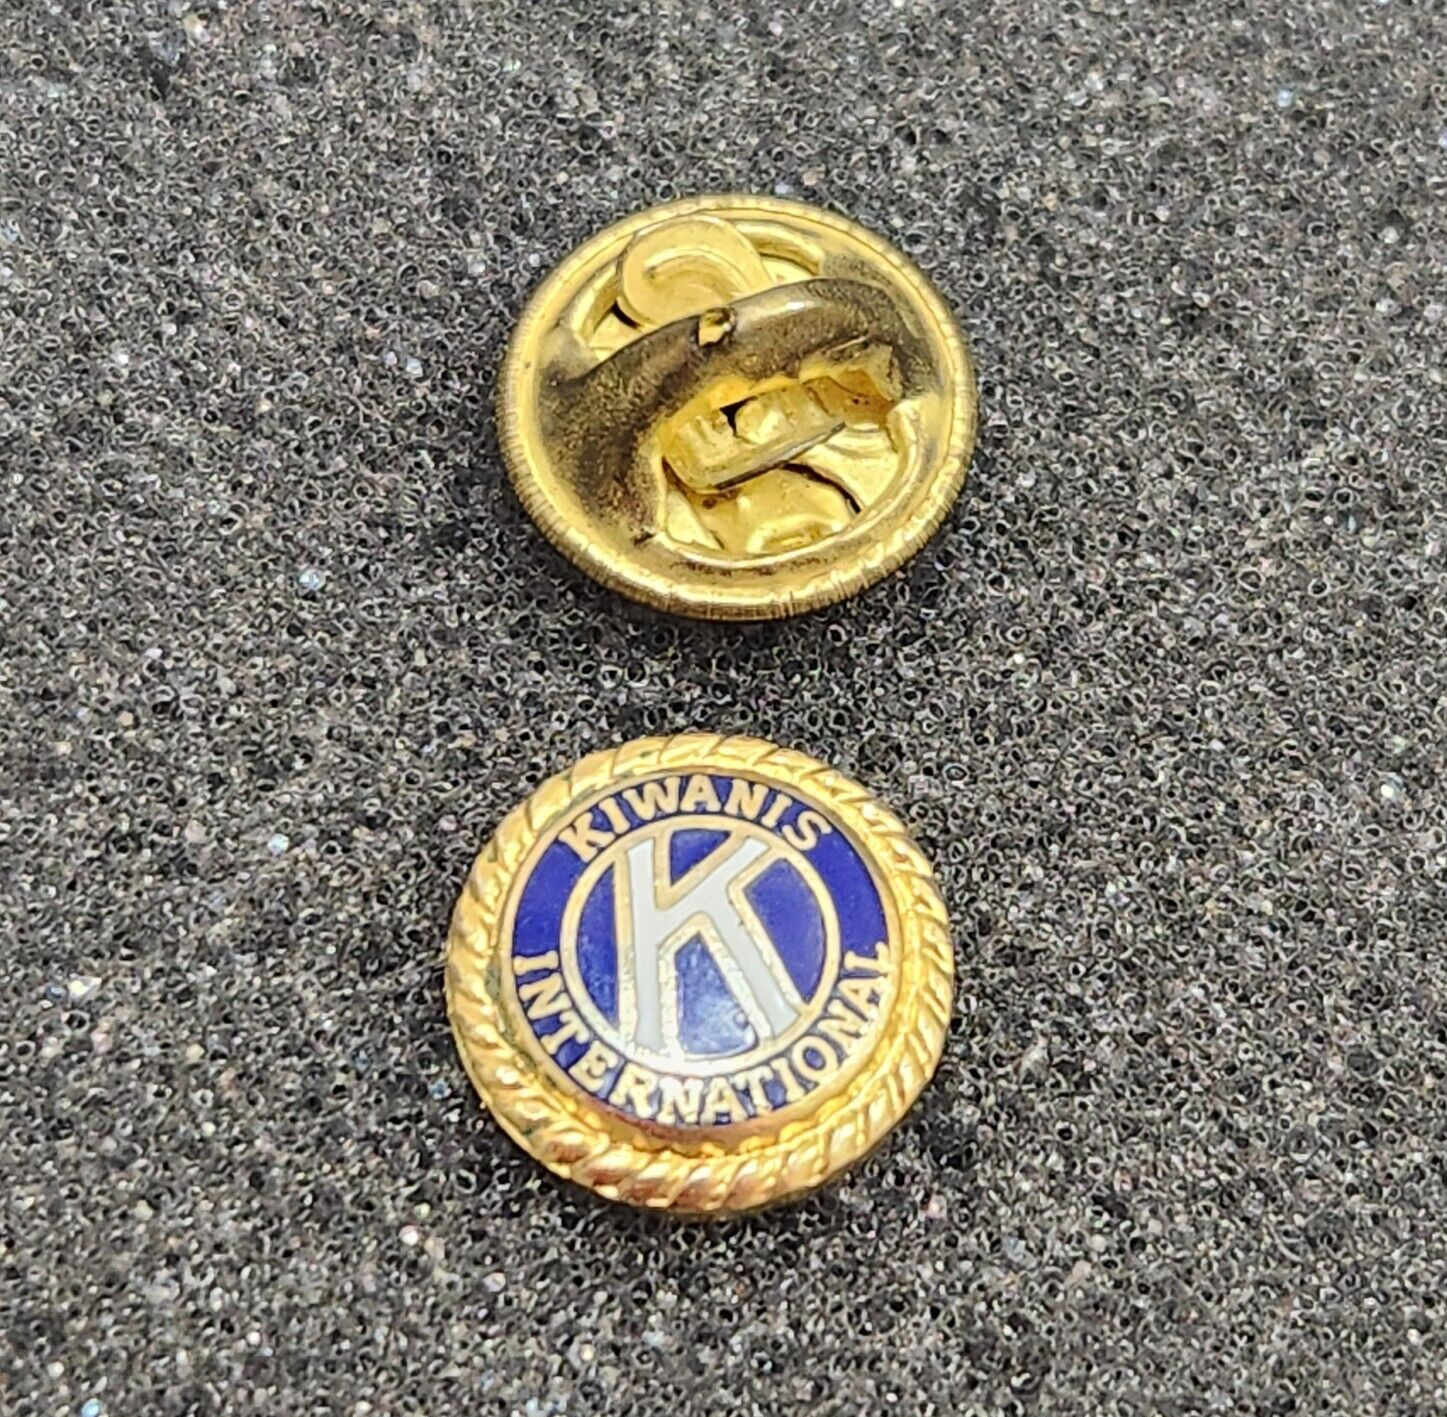 Kiwanis International Aktion Club Gold Tone Lapel Pin Badge Brooch